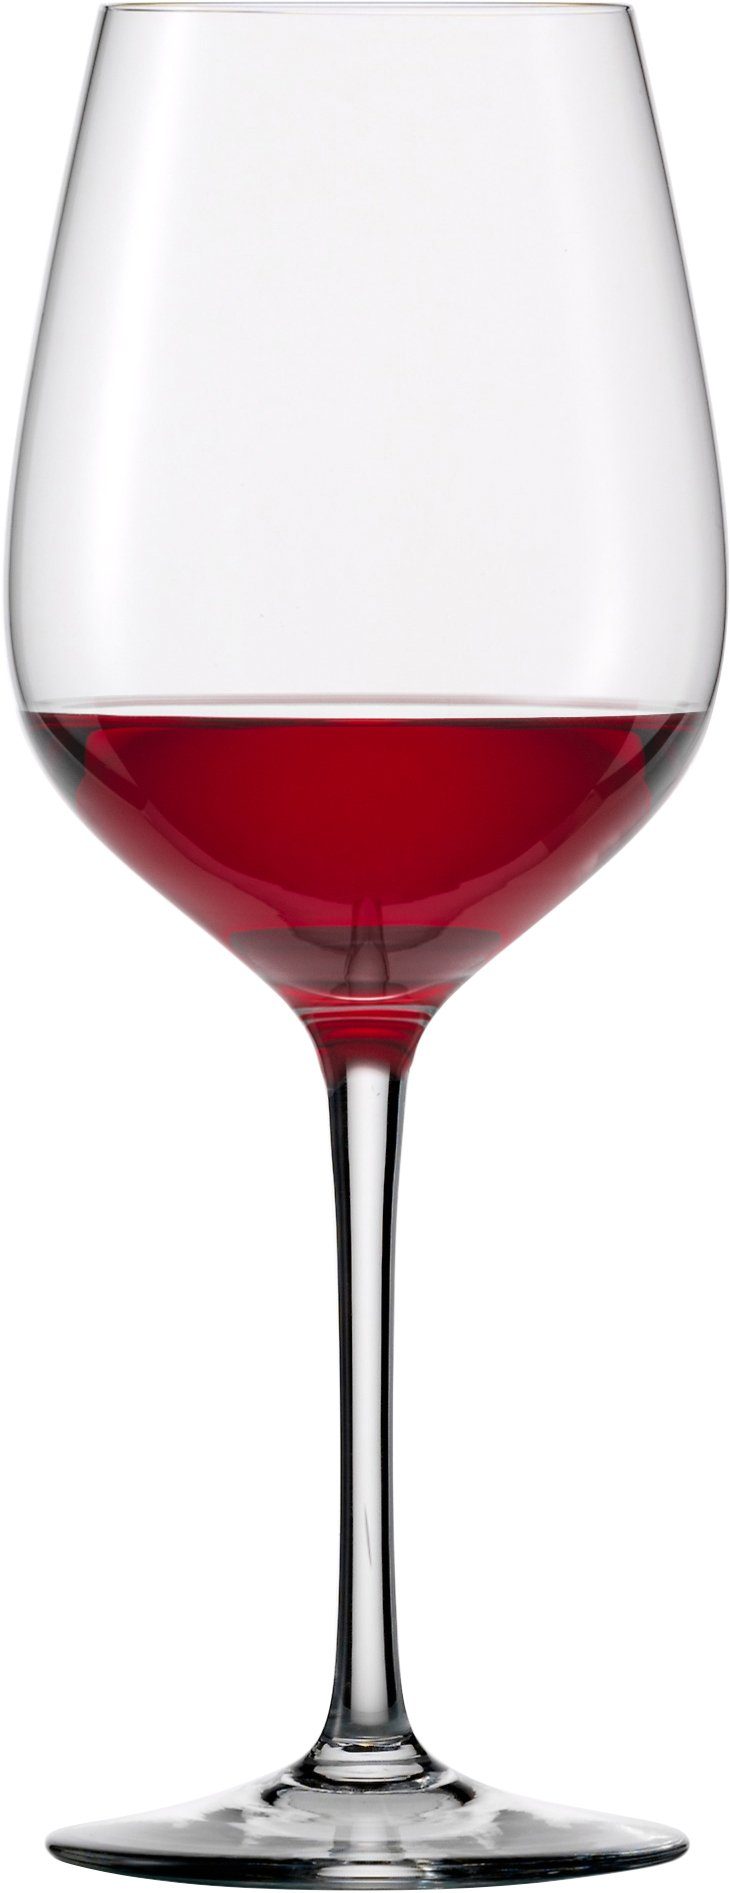 Eisch Rotweinglas Superior SensisPlus, Kristallglas, Bleifrei, 600 ml, 4-teilig